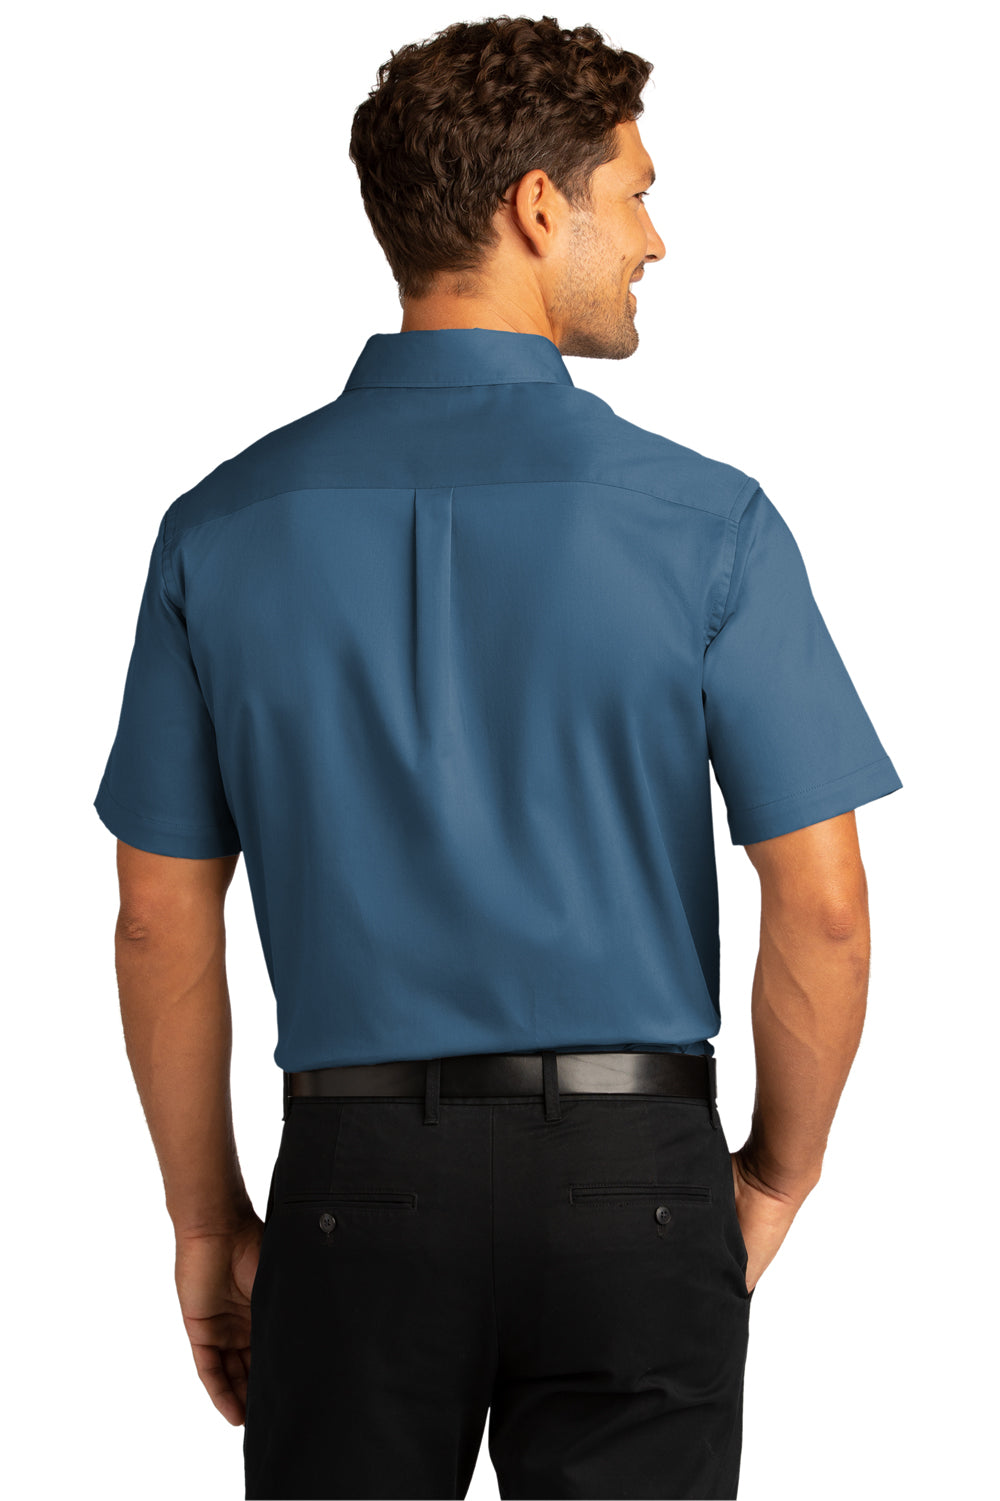 Port Authority Mens SuperPro React Short Sleeve Button Down Shirt w/ Pocket Regatta Blue Side